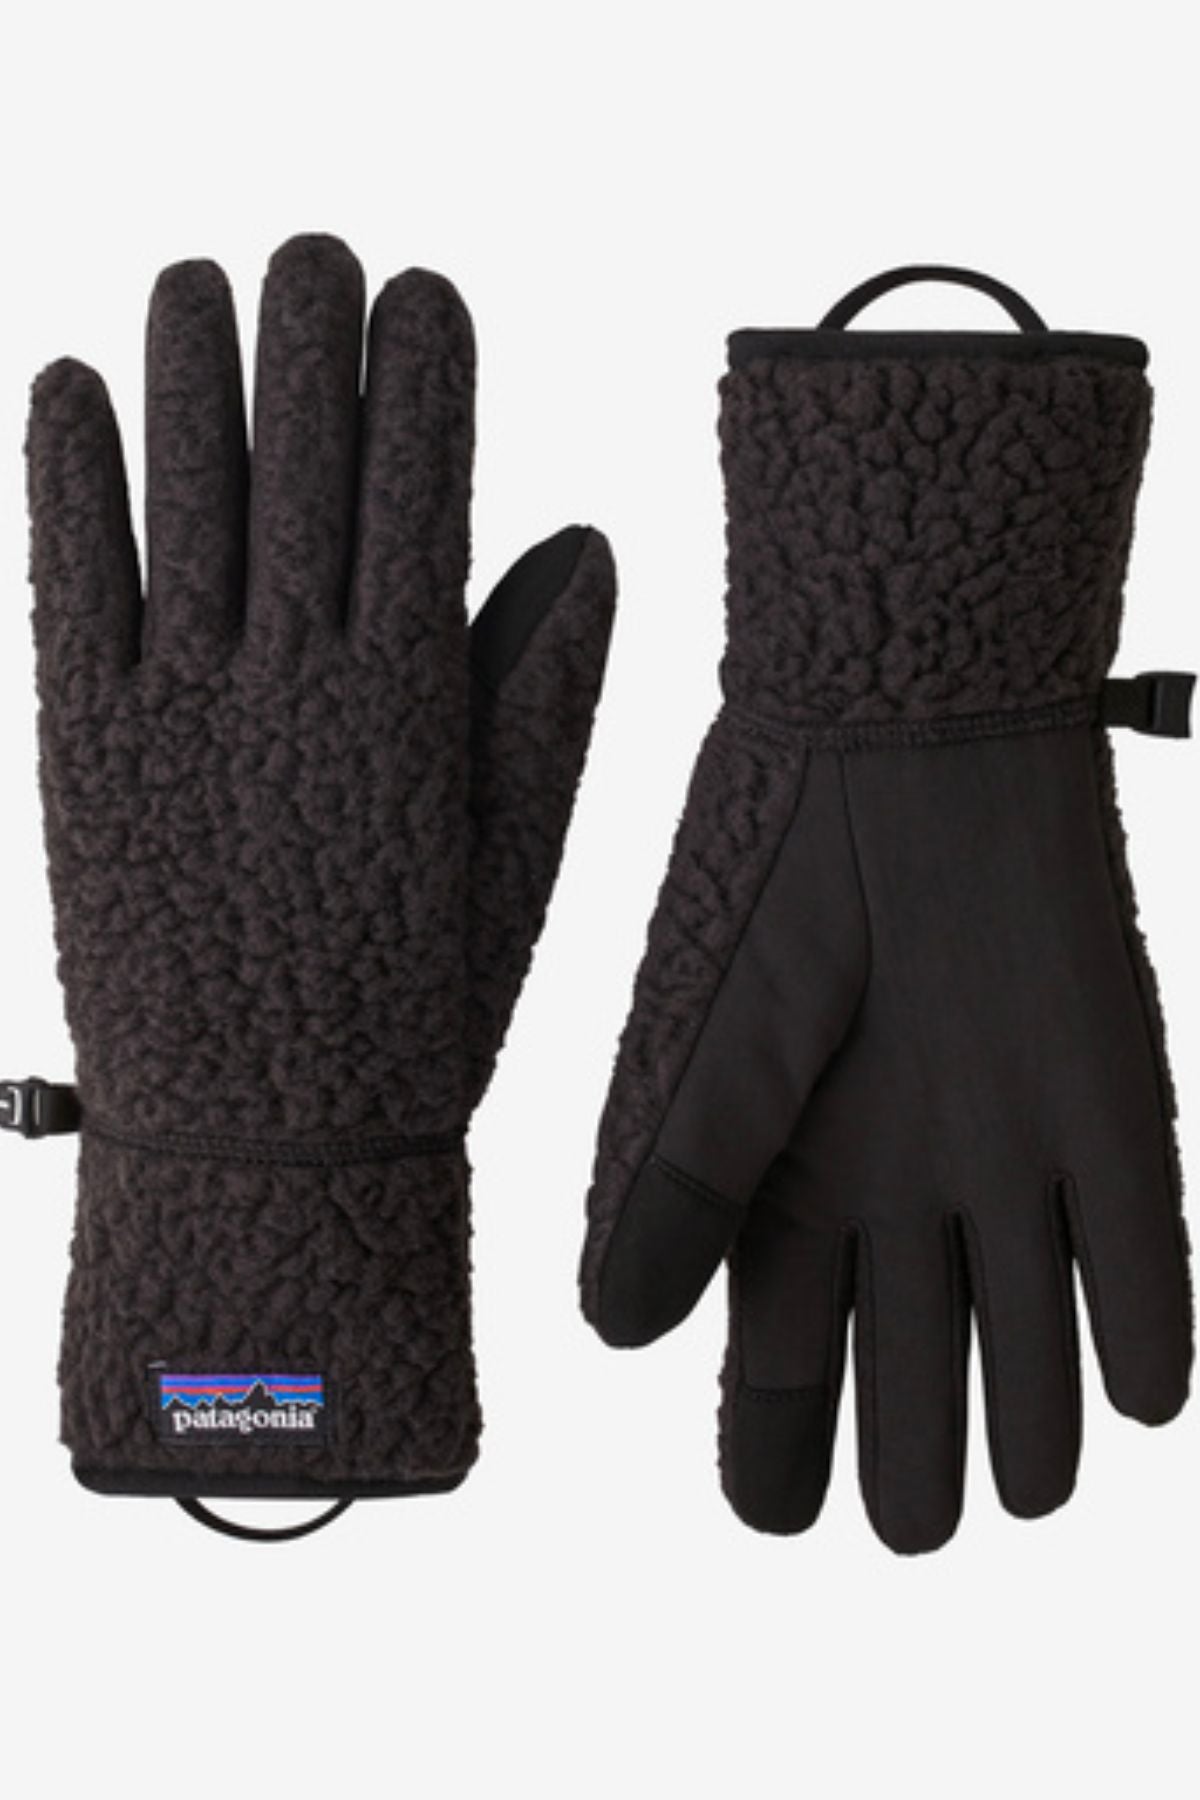 Retro Pile Gloves - Patagonia